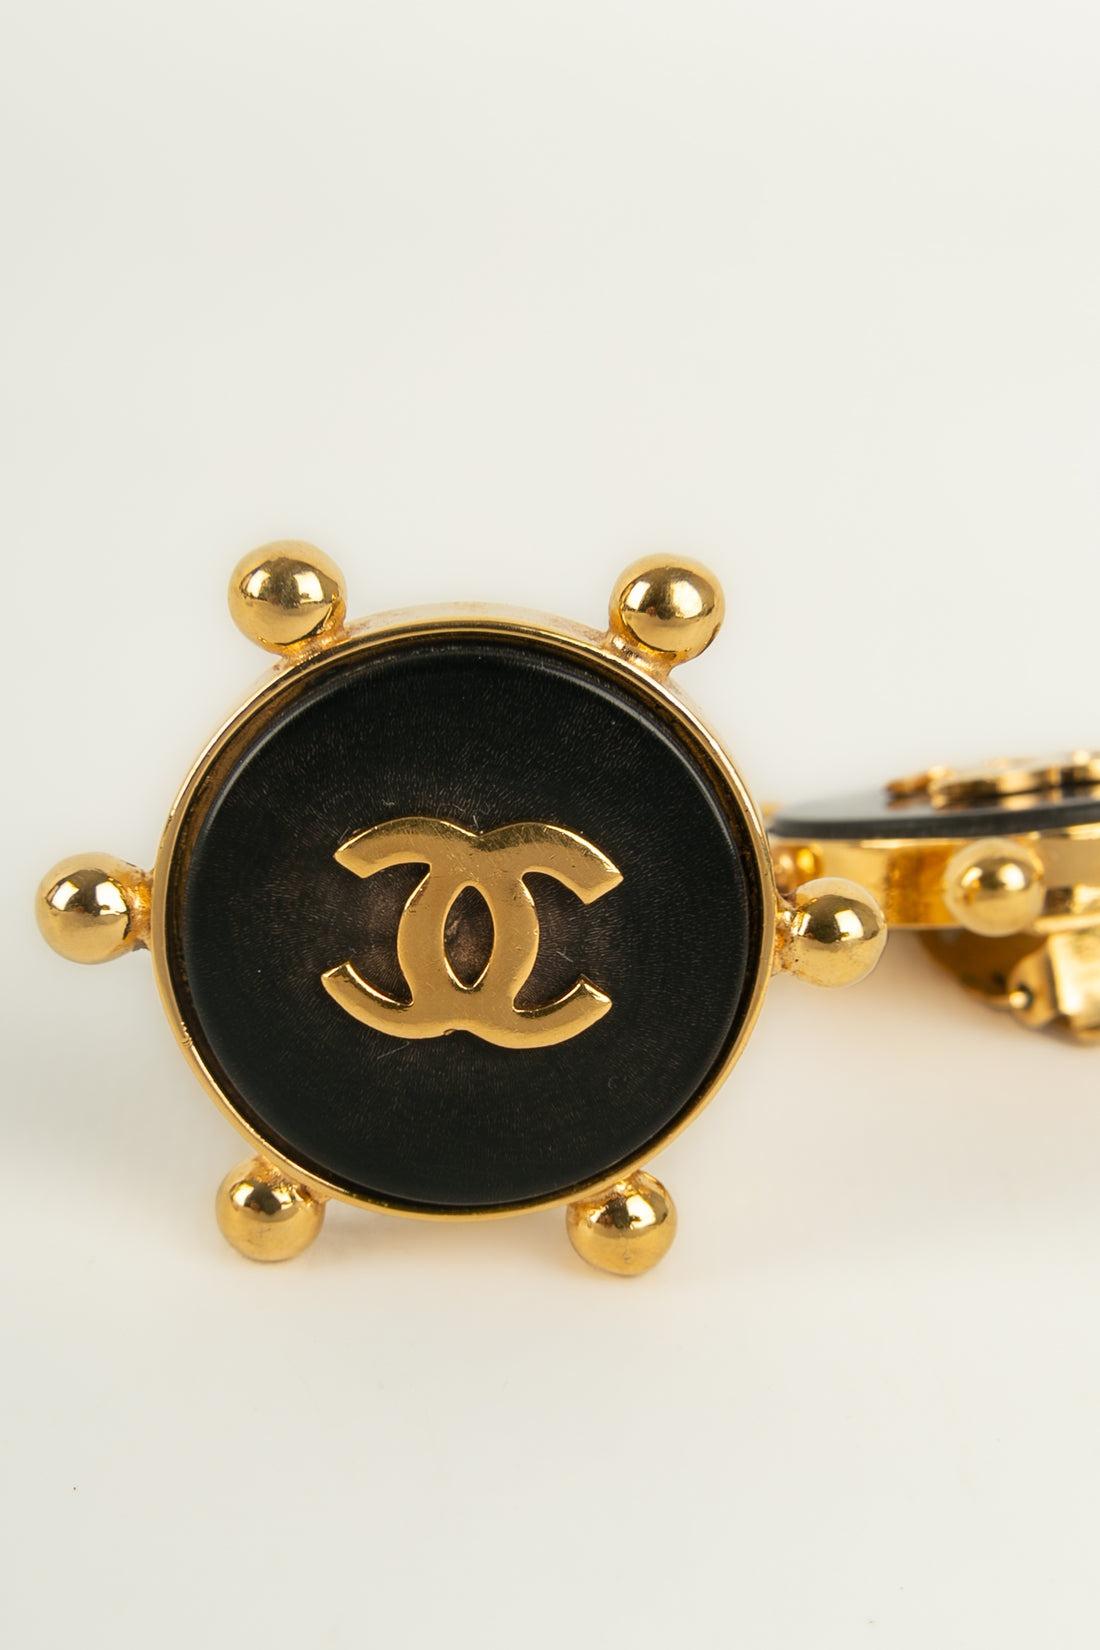 Chanel Earrings in Golden Metal and Black Bakelite For Sale 1